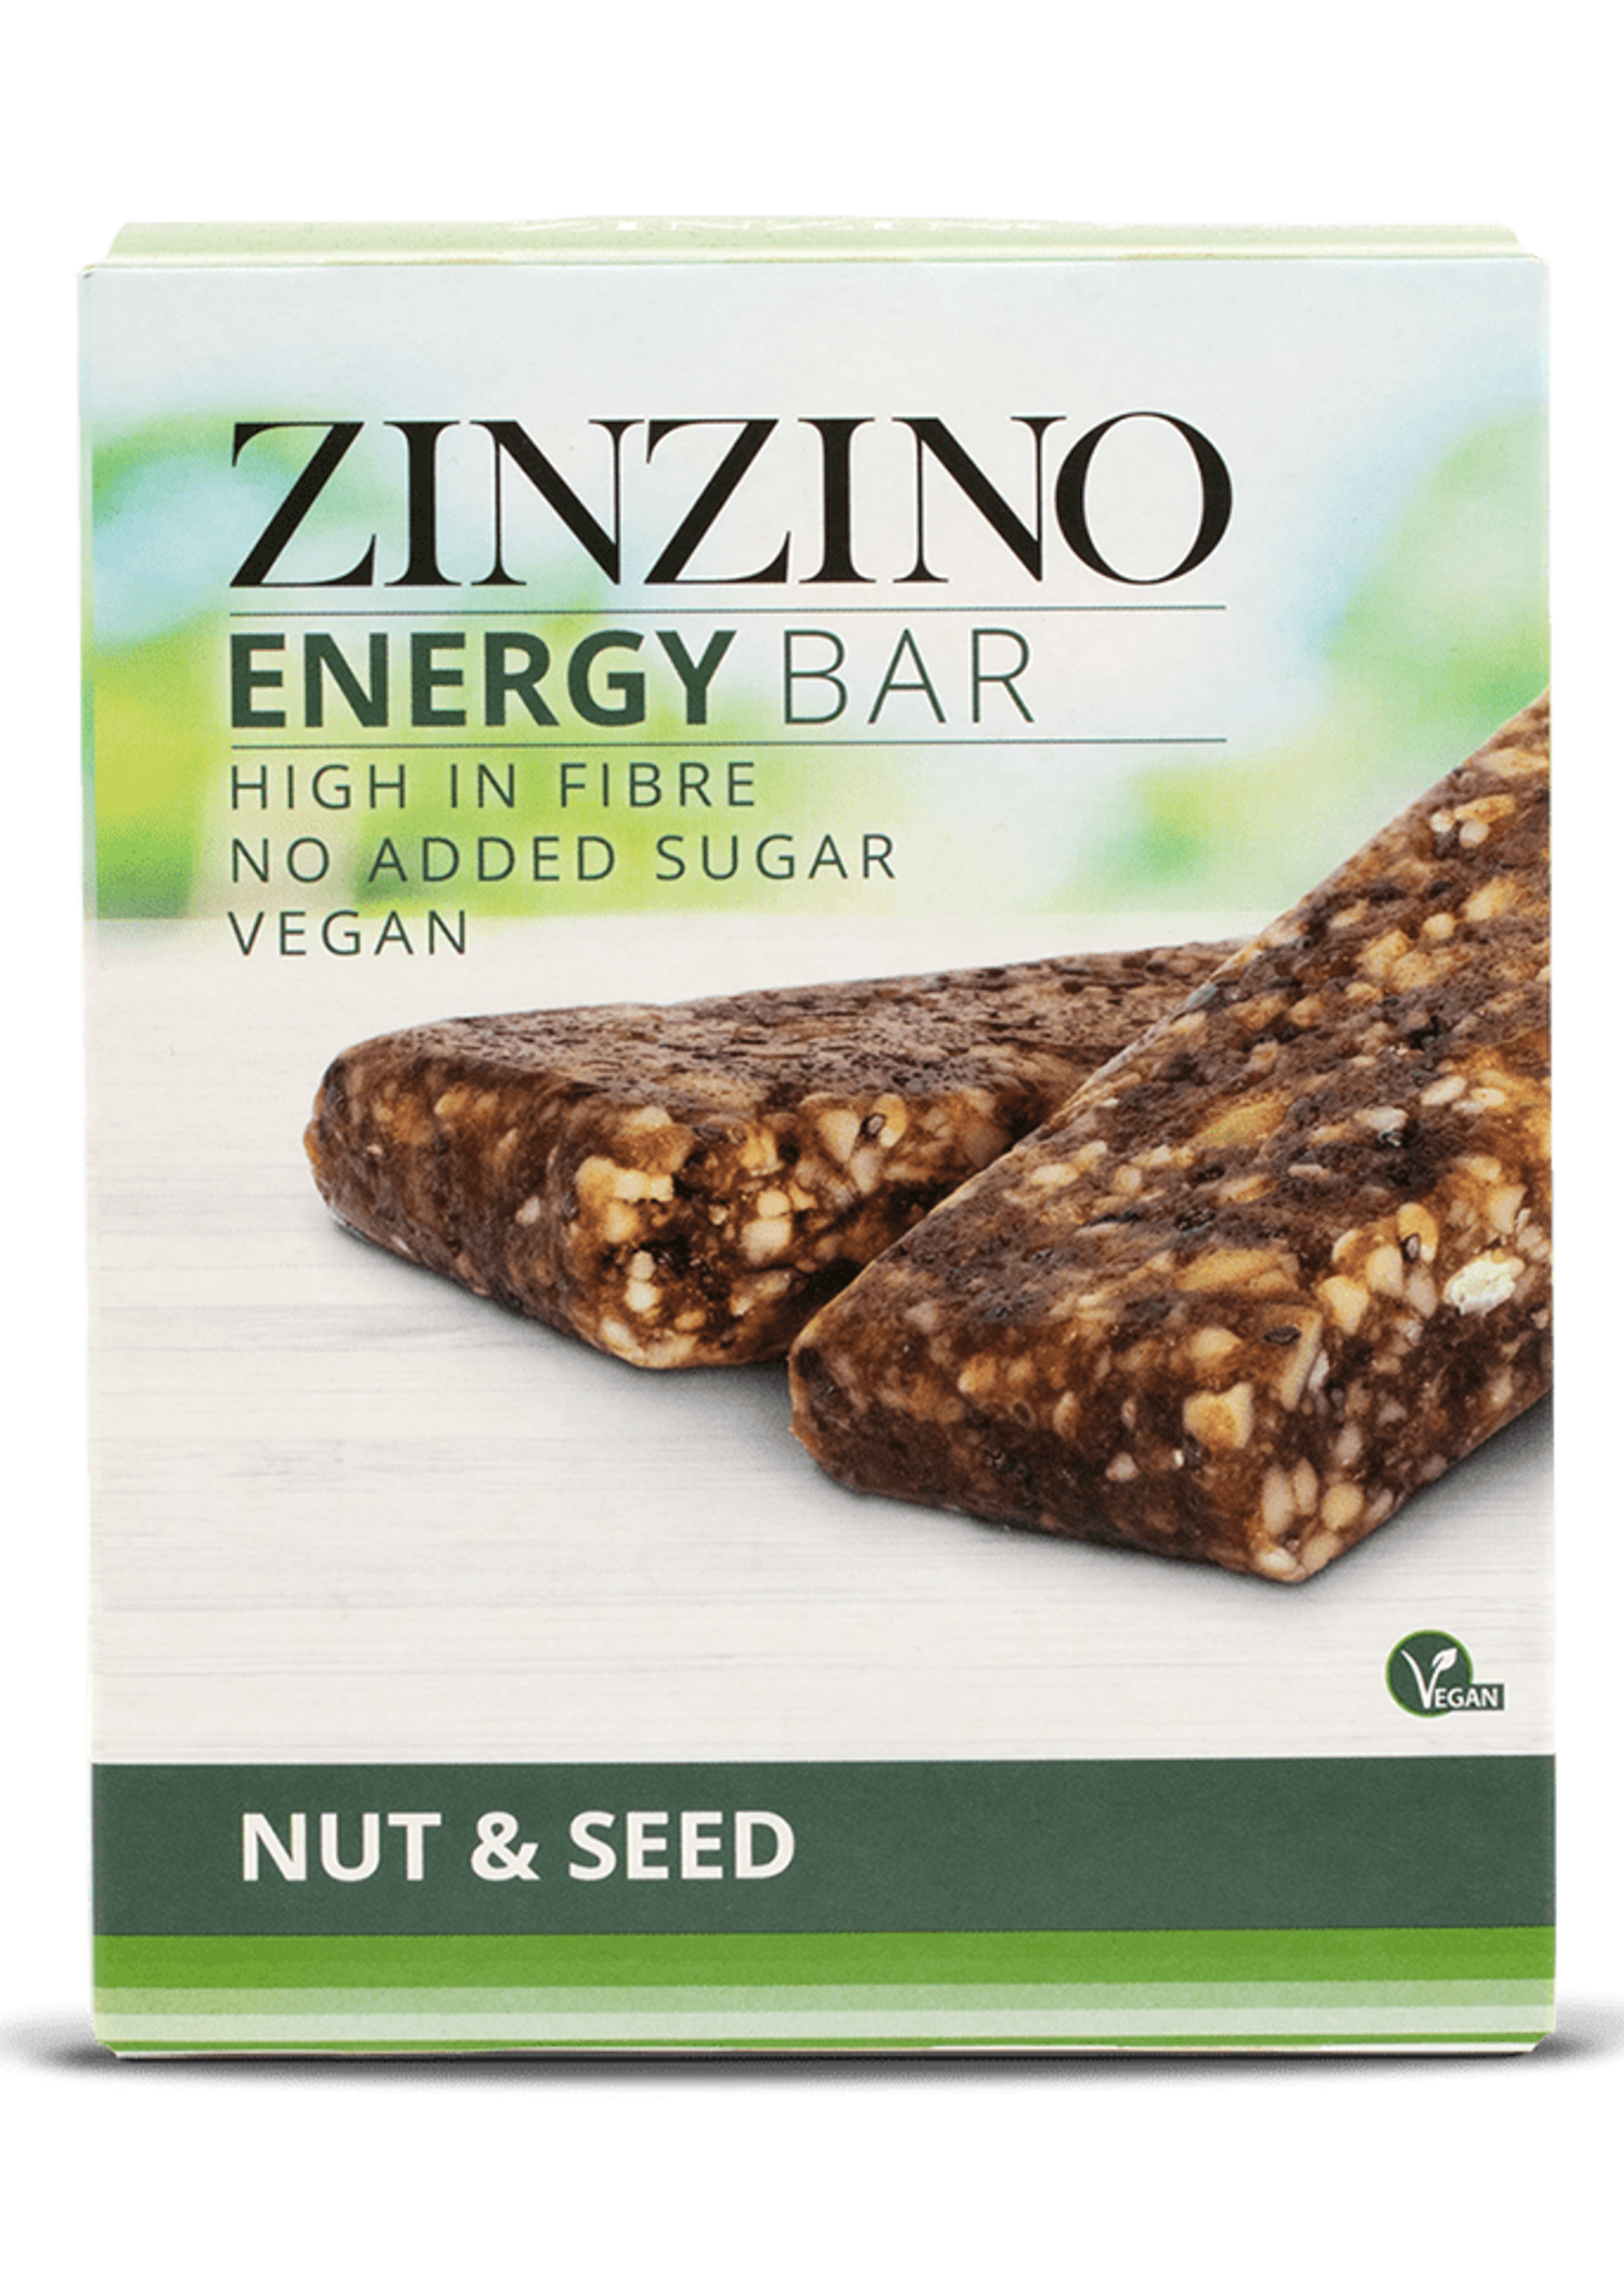 Zinzino Vegan energy bar